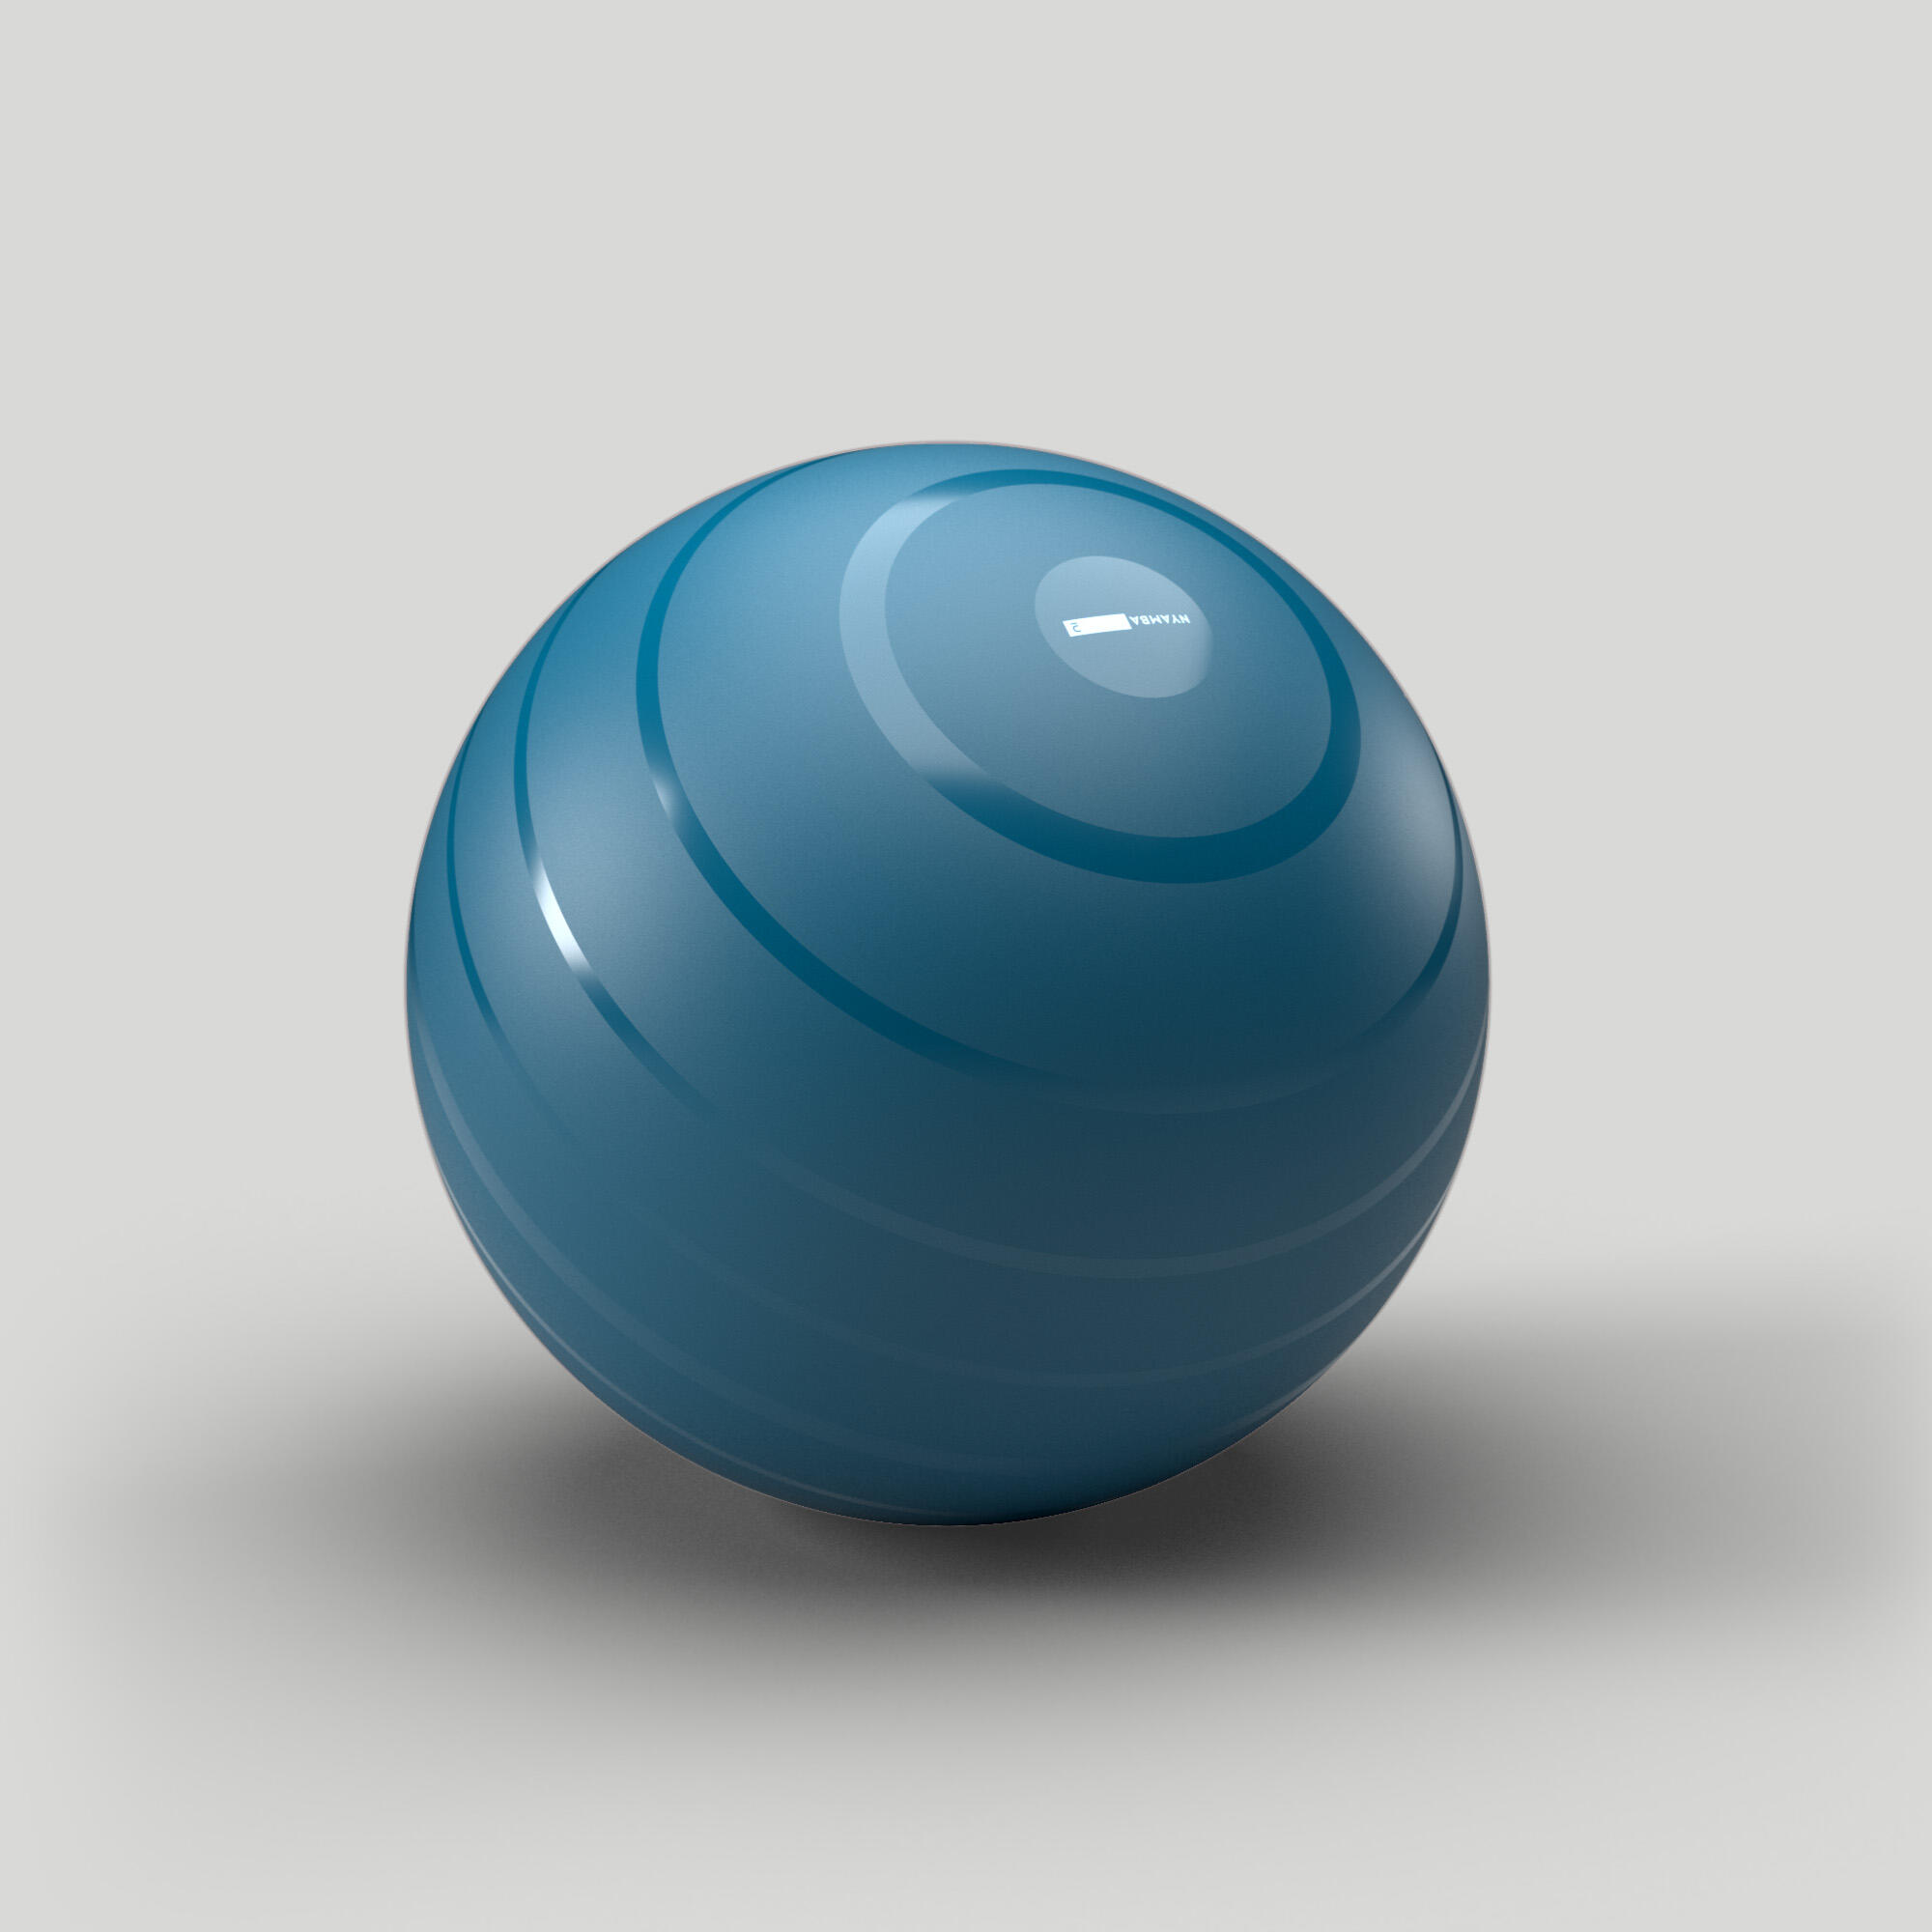 Size 3 (75 cm) Pilates Swiss Ball - Blue - DOMYOS